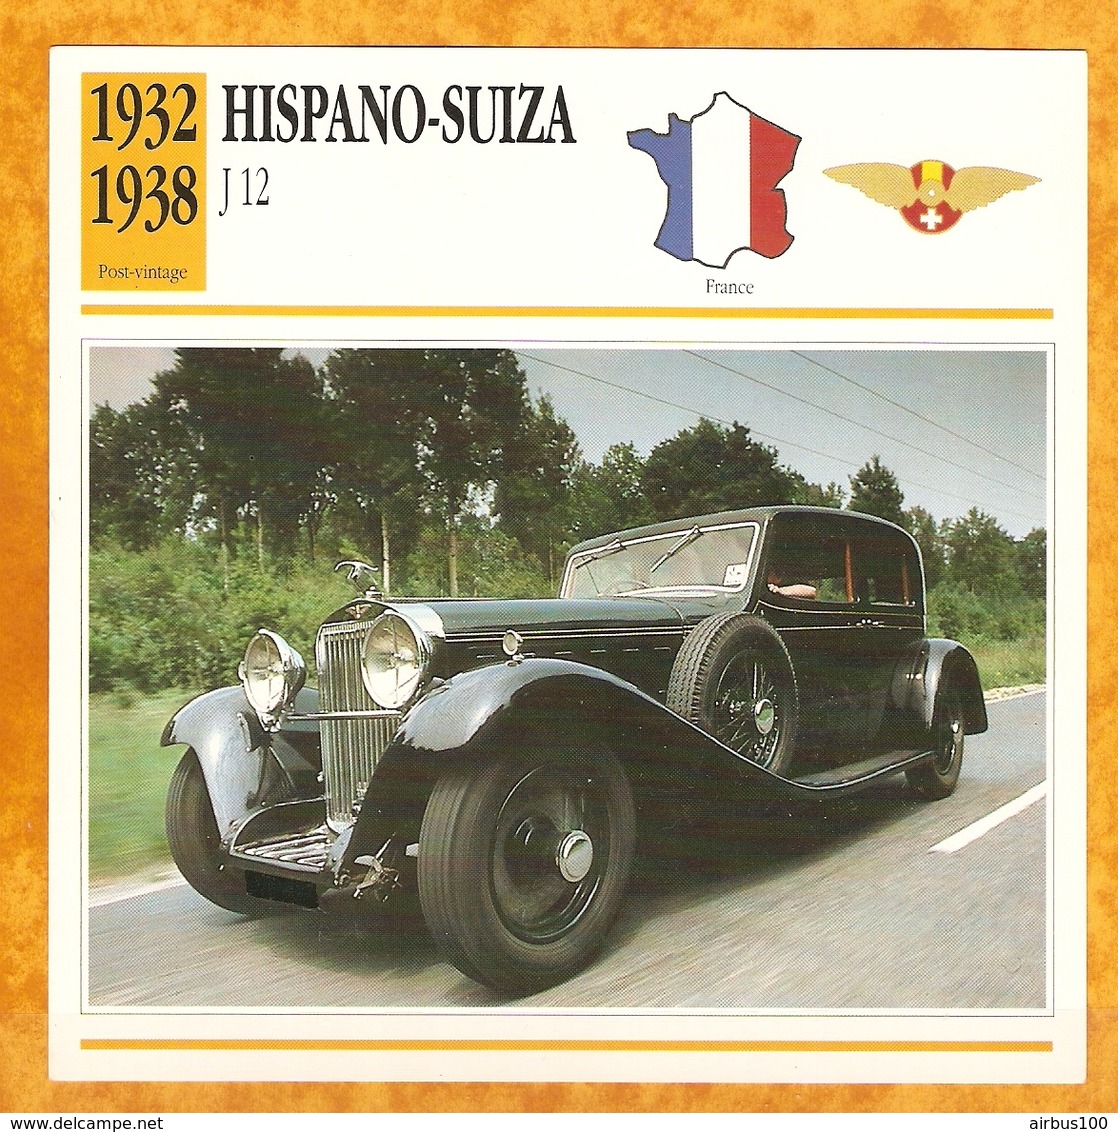 1932 FRANCE VIEILLE VOITURE HISPANO SUIZA J12 J 12- FRANCE OLD CAR - FRANCIA VIEJO COCHE - VECCHIA MACCHINA - Coches